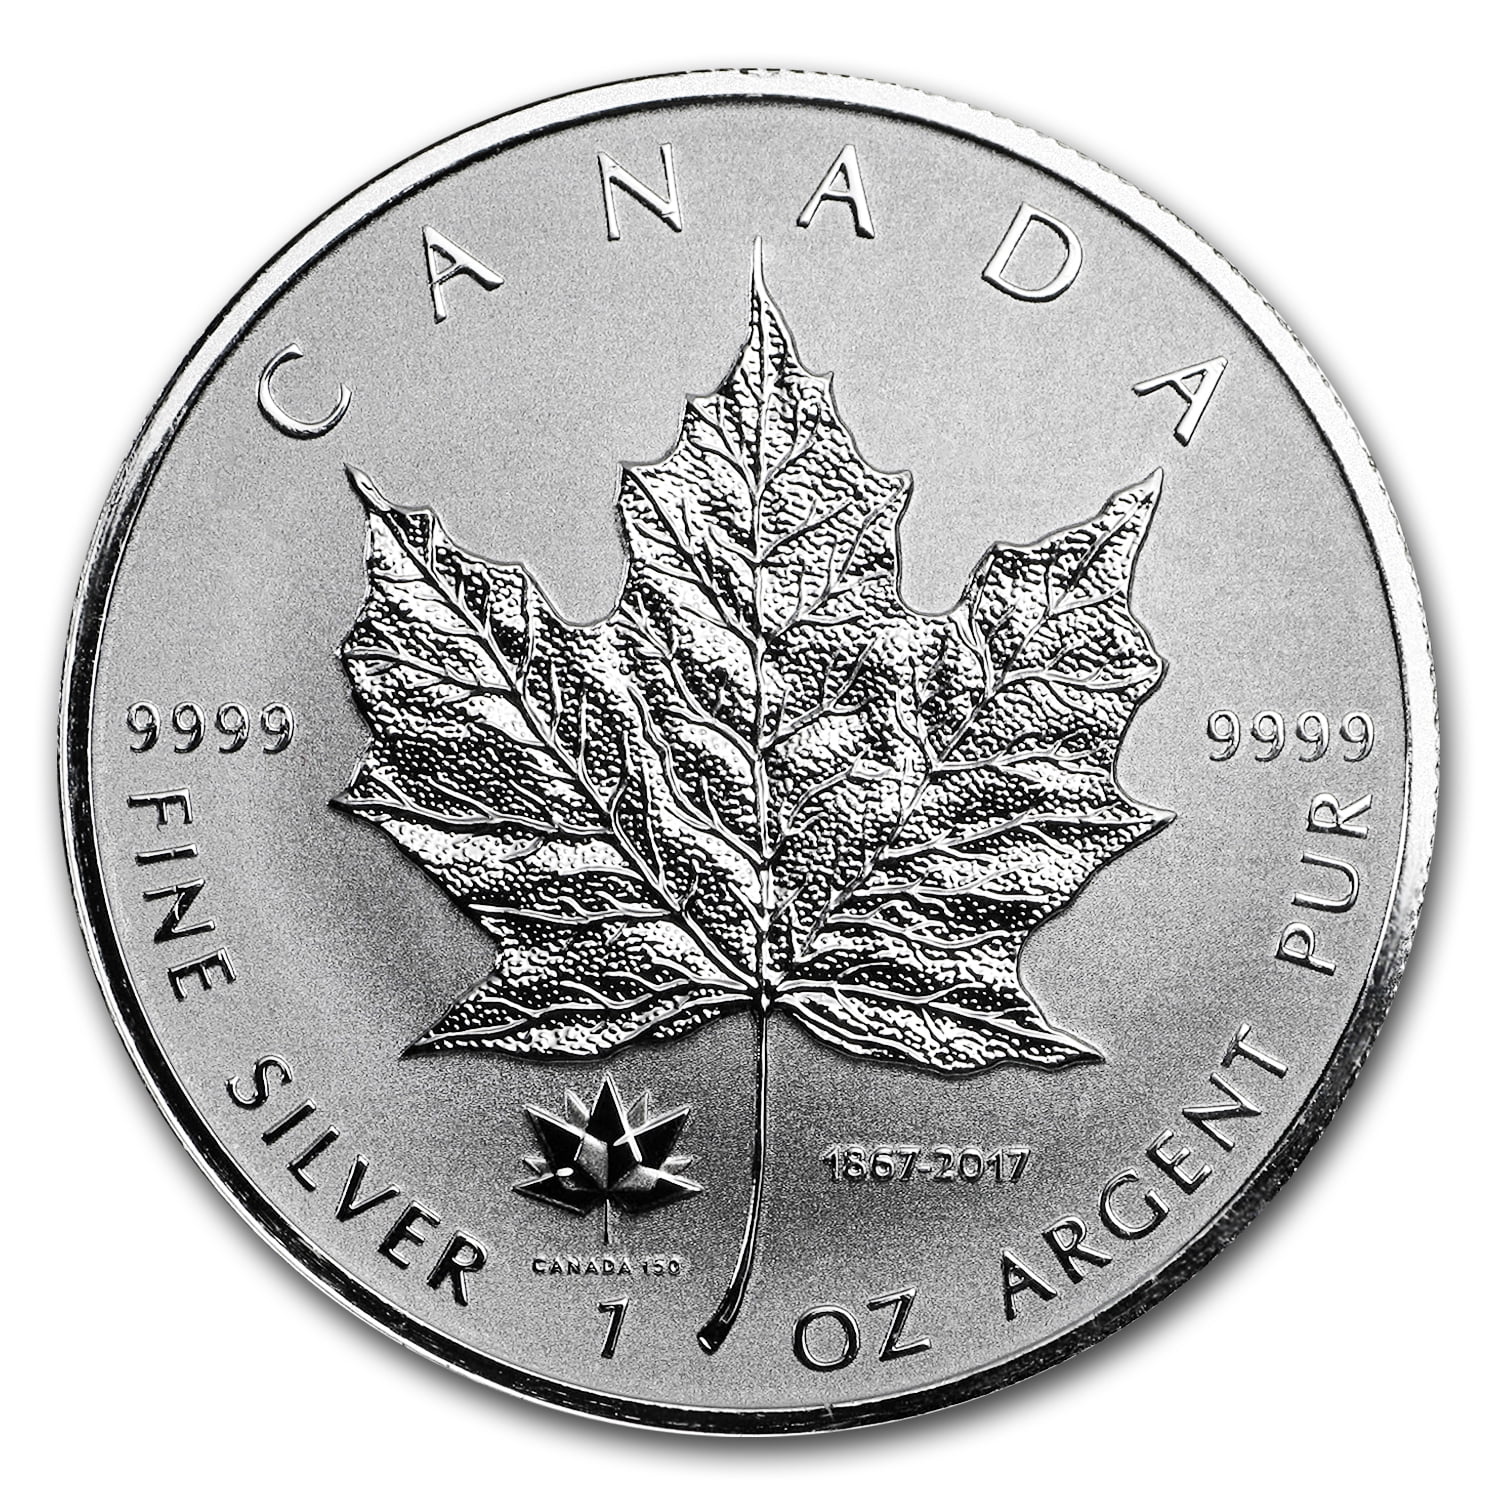 1867-2017 Canada Maple Leaf 150th Anniversary Privy RCM 1 oz Silver Coin 